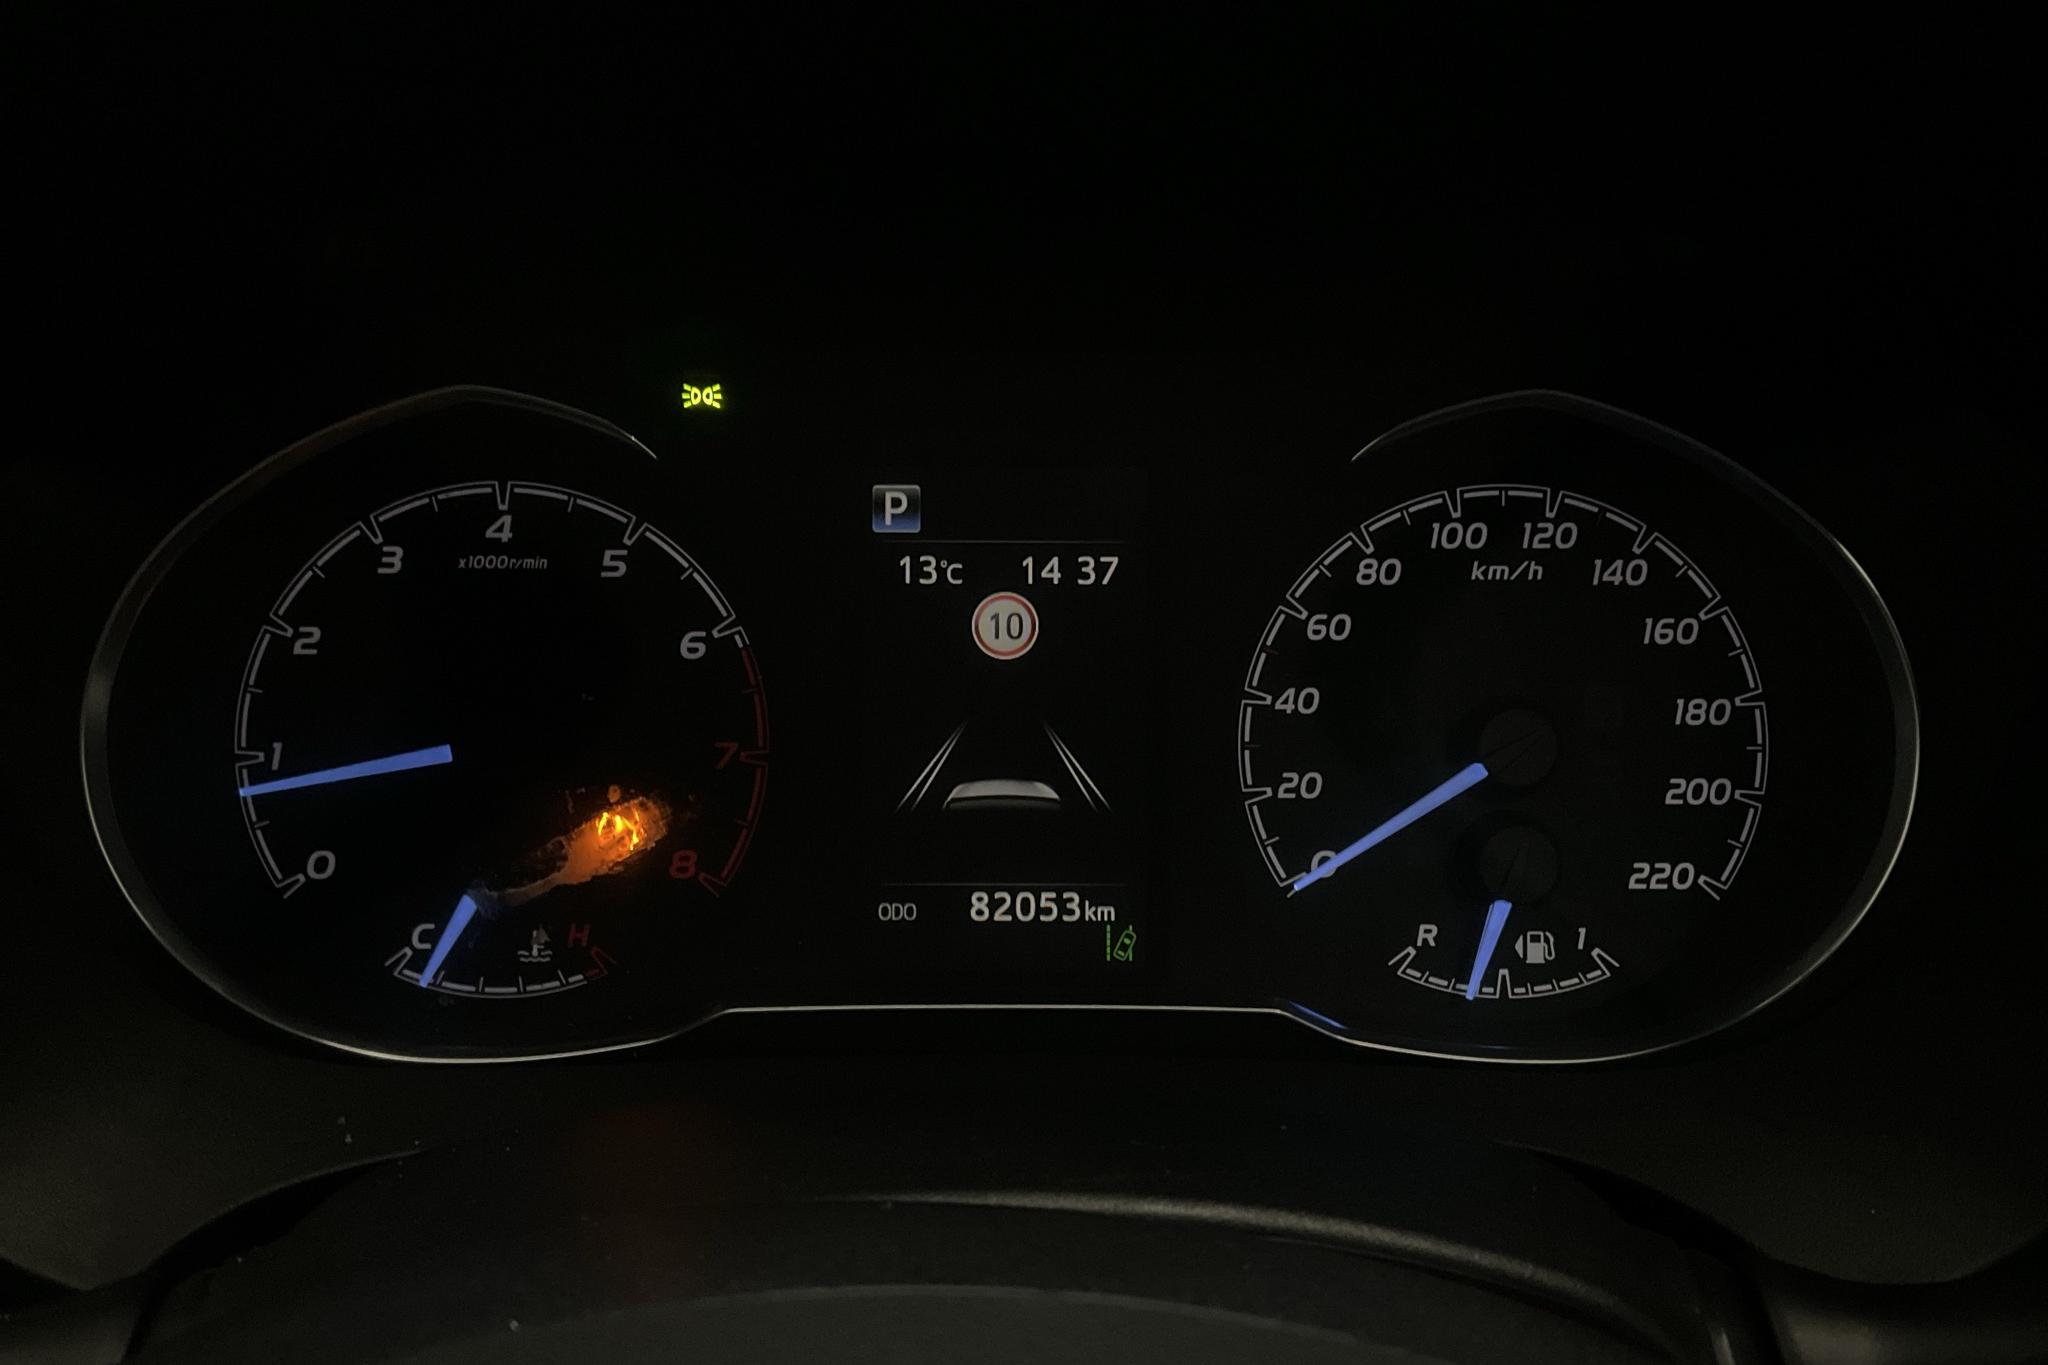 Toyota Yaris 1.5 5dr (111hk) - 82 050 km - Automatic - white - 2018